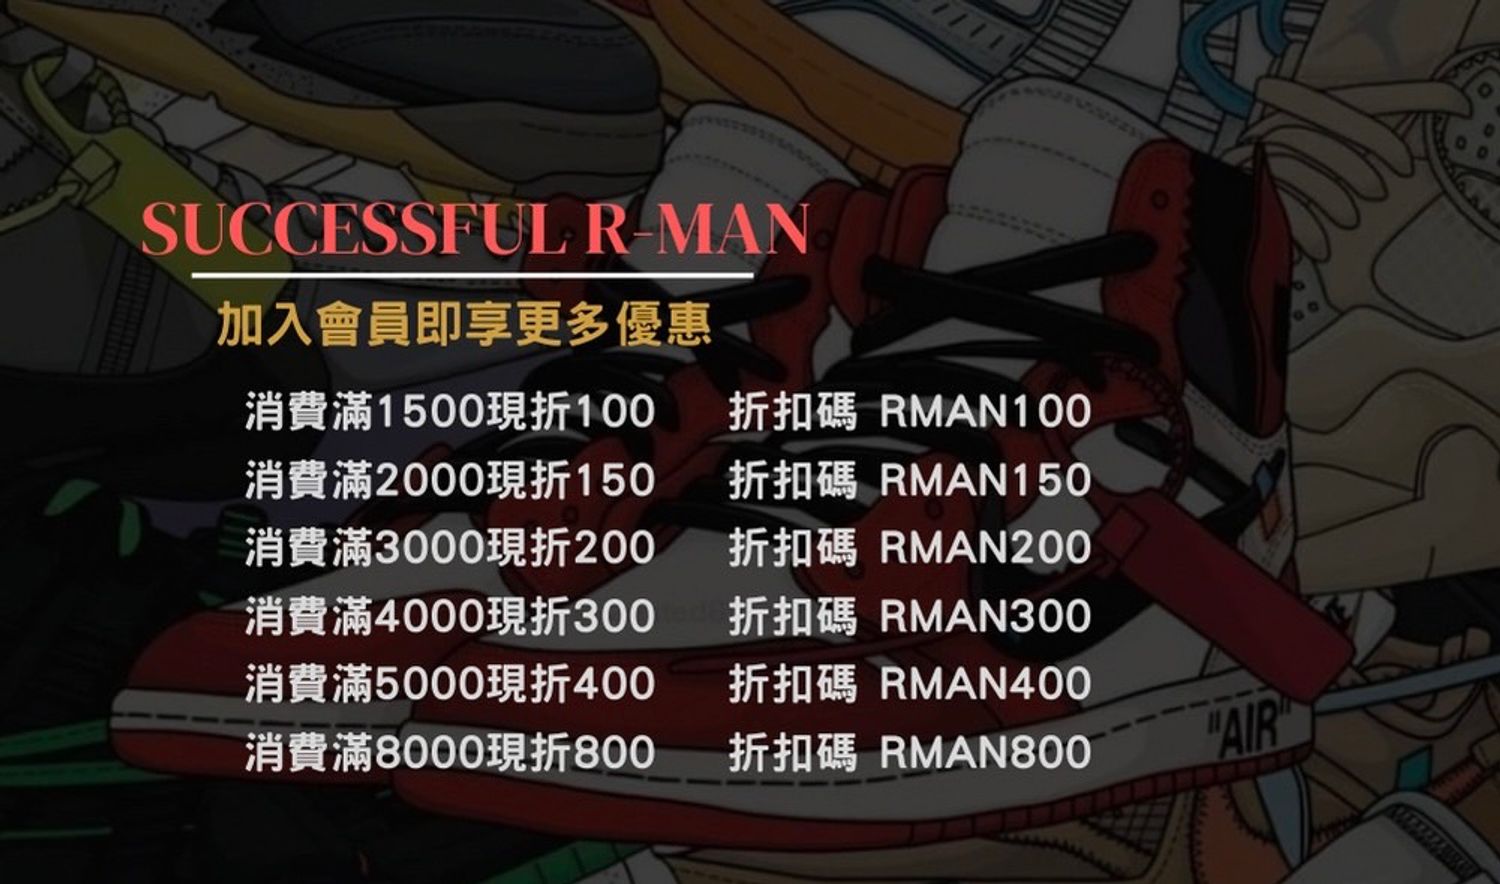 Successful R-Man - 